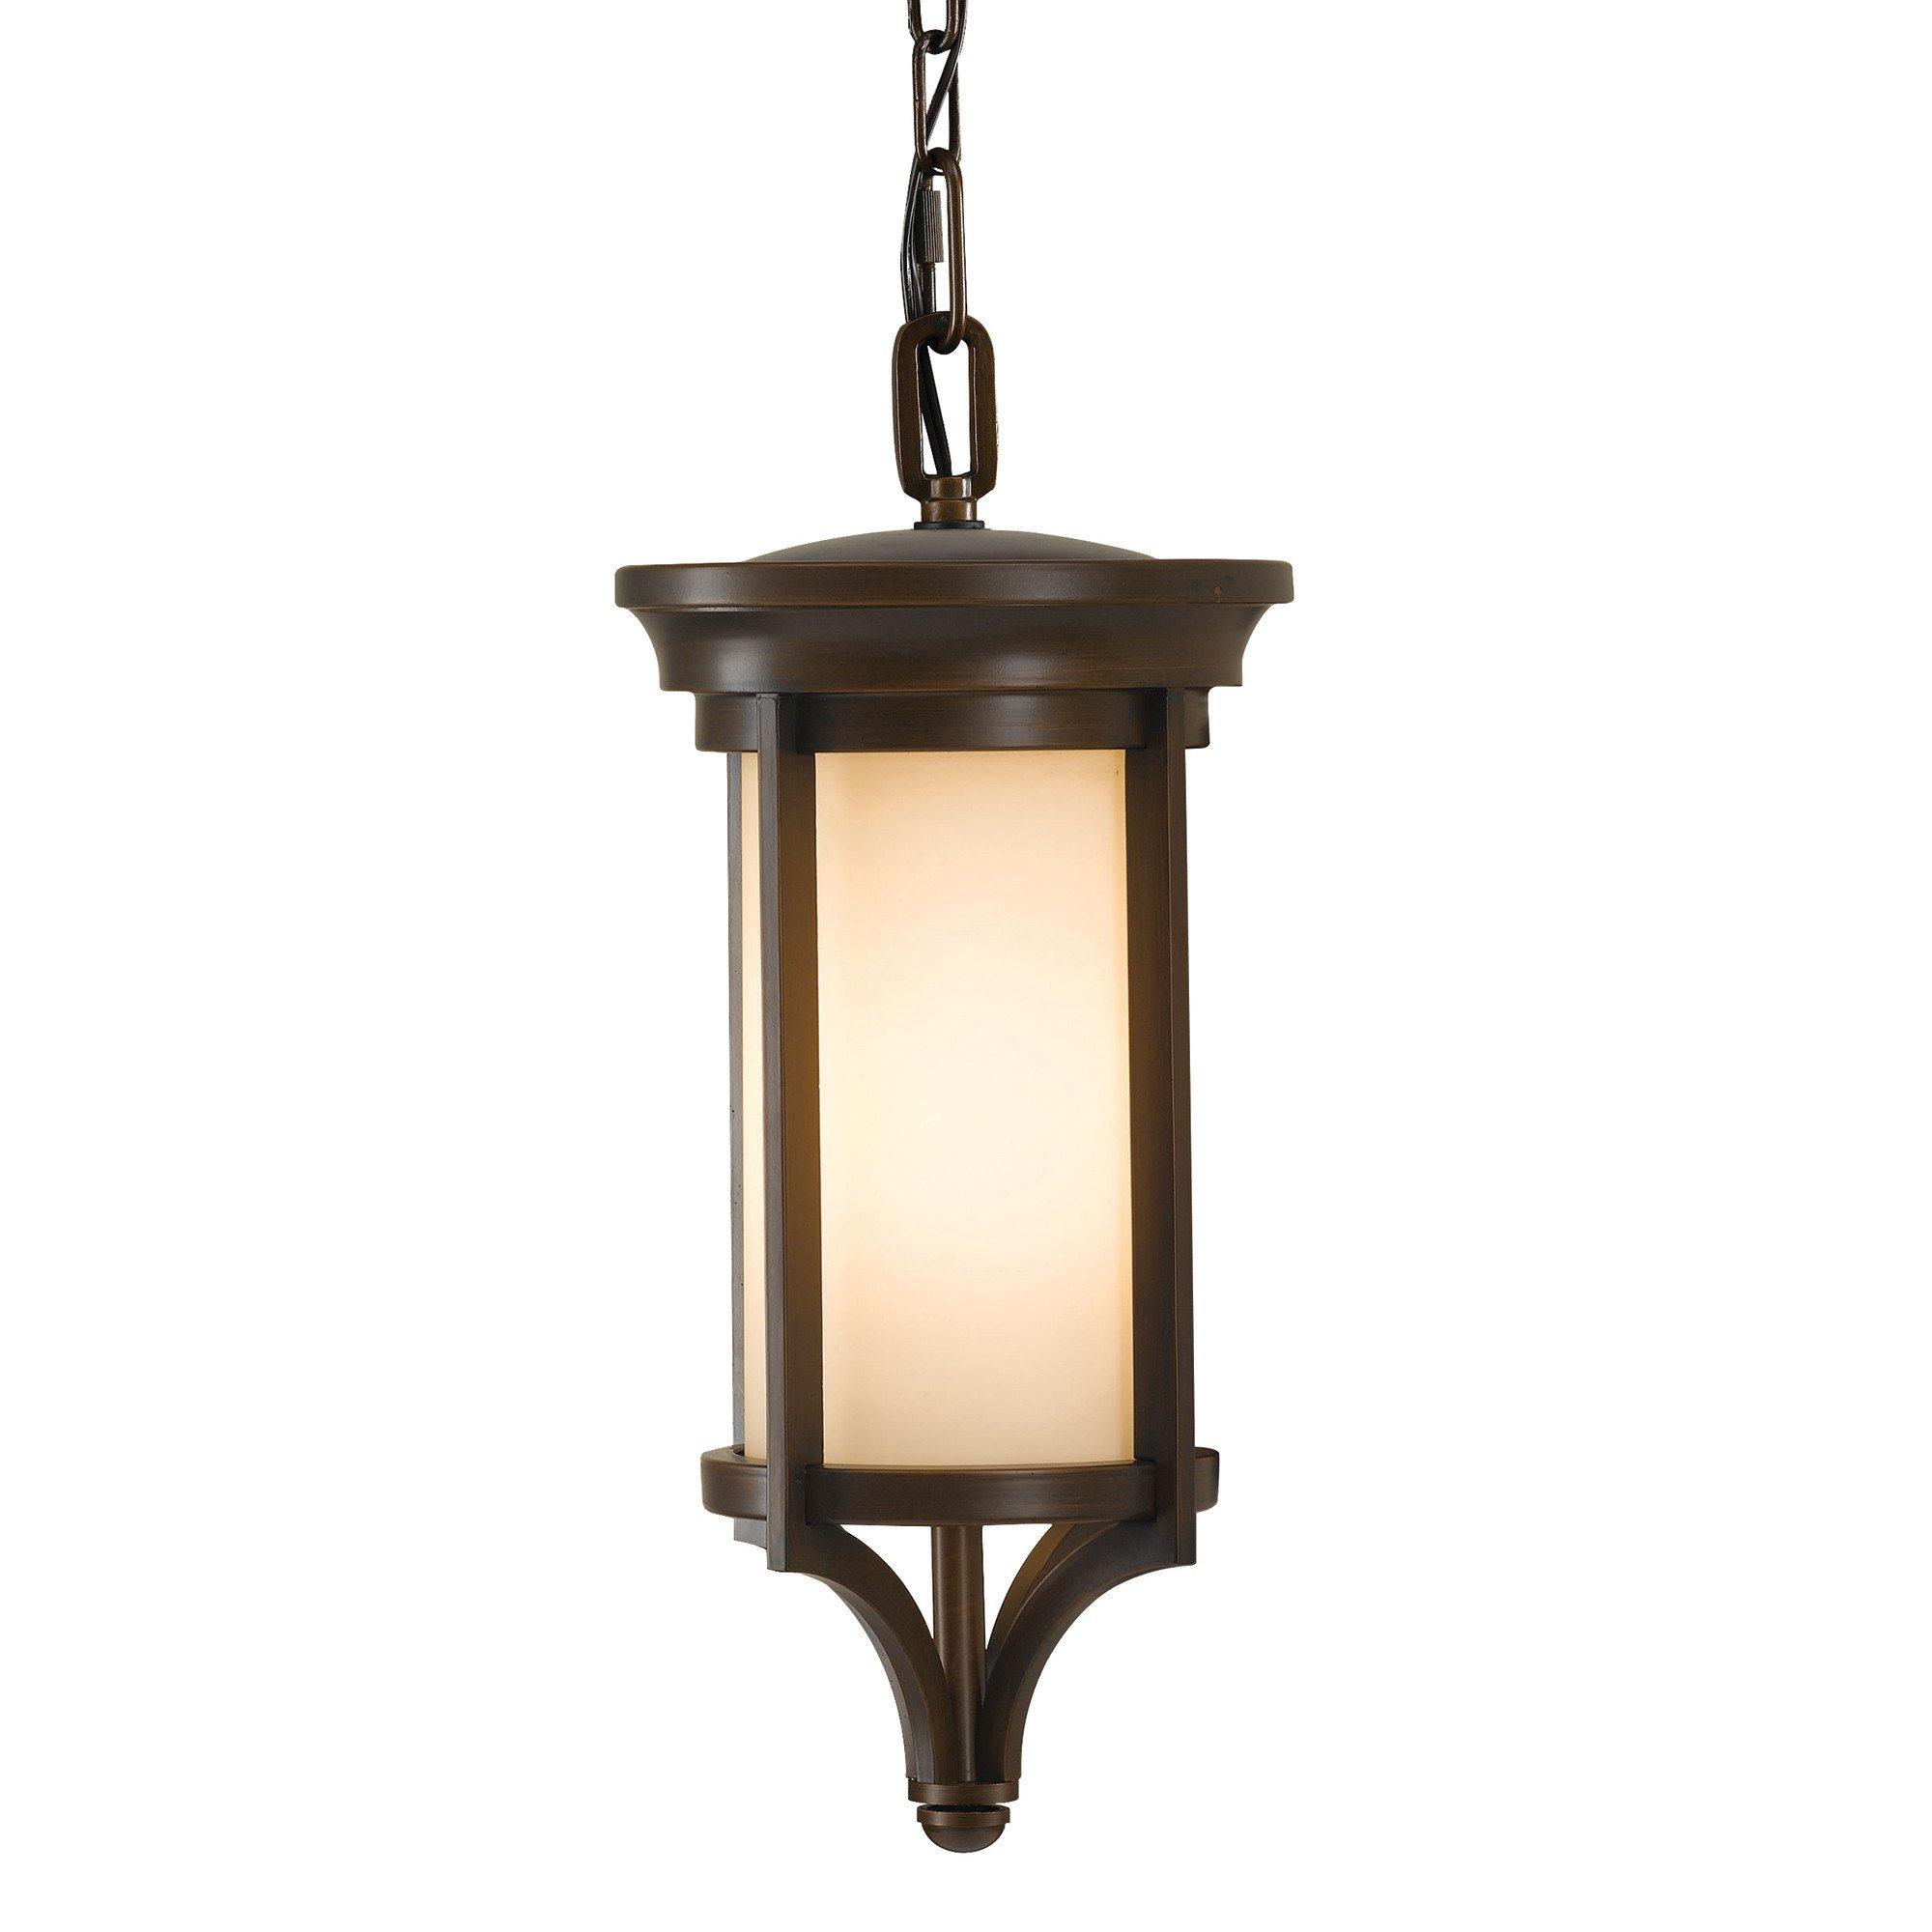 Merrill 1 Light Small Outdoor Ceiling Chain Lantern Heritage Bronze E27